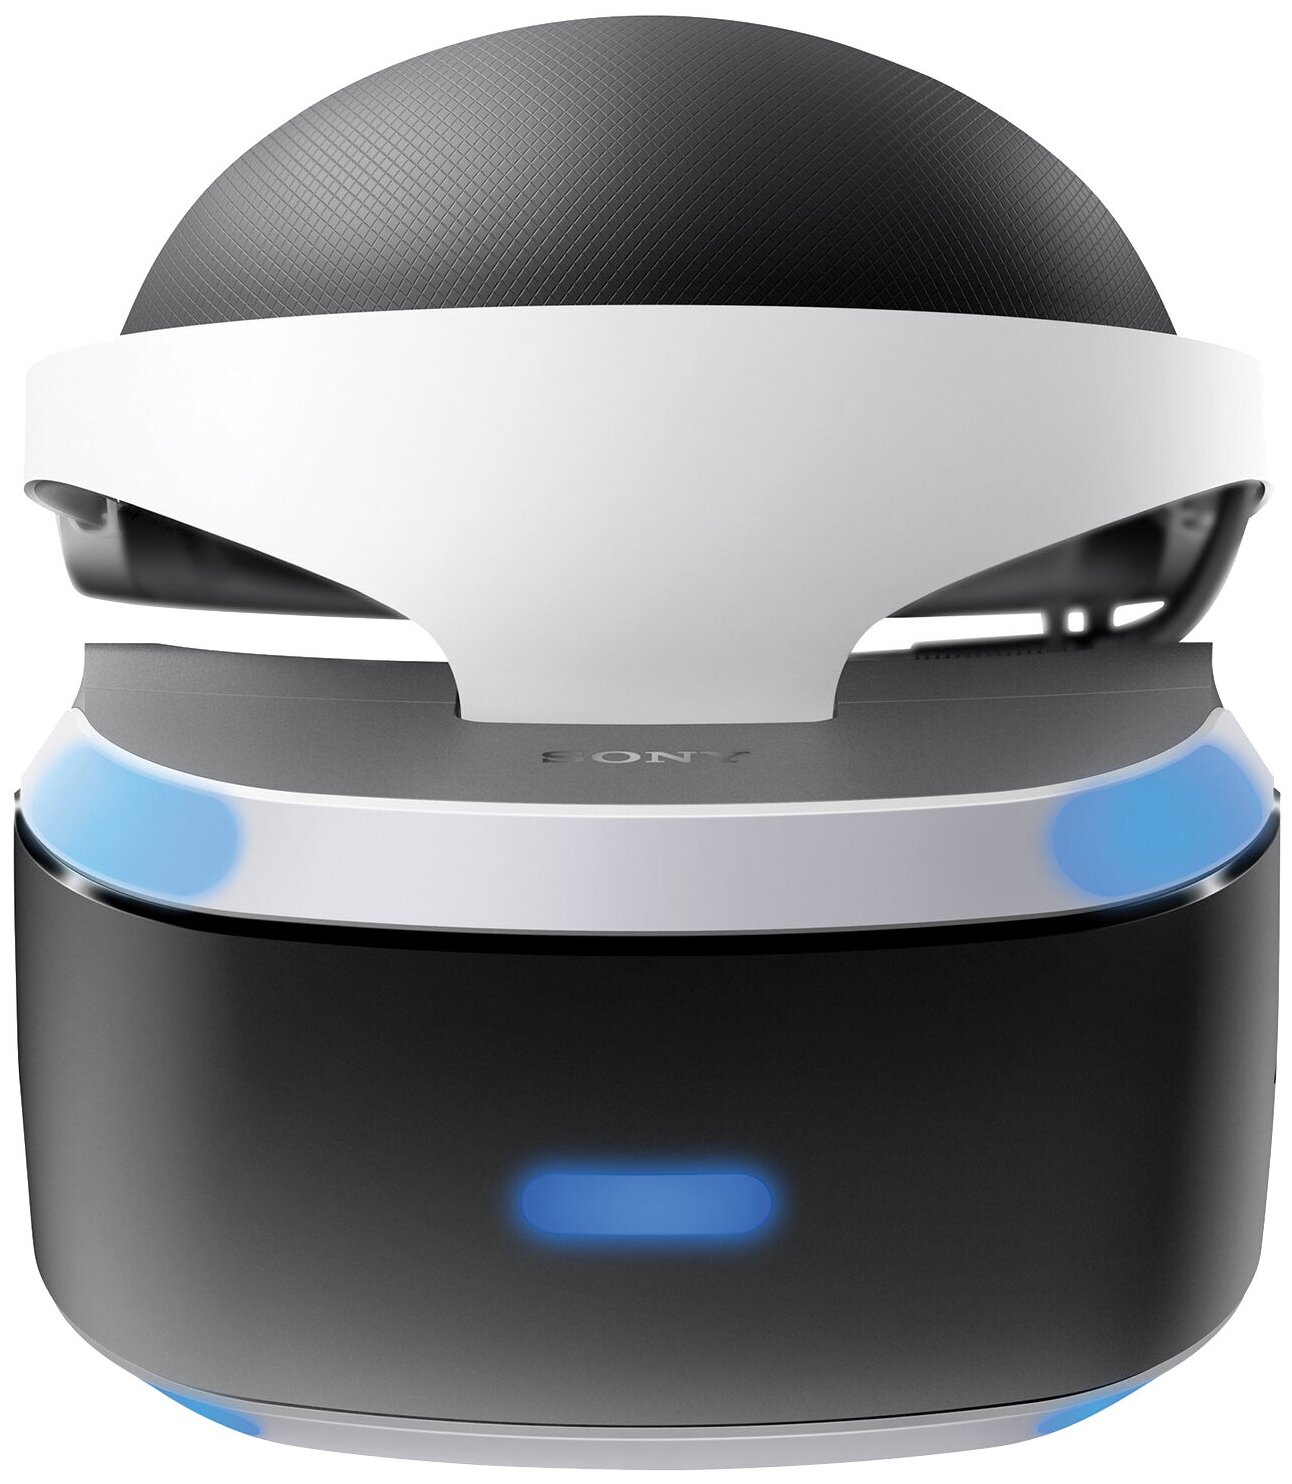 Sony PlayStation VR CUH-ZVR1 - частота обновления: 120 Гц